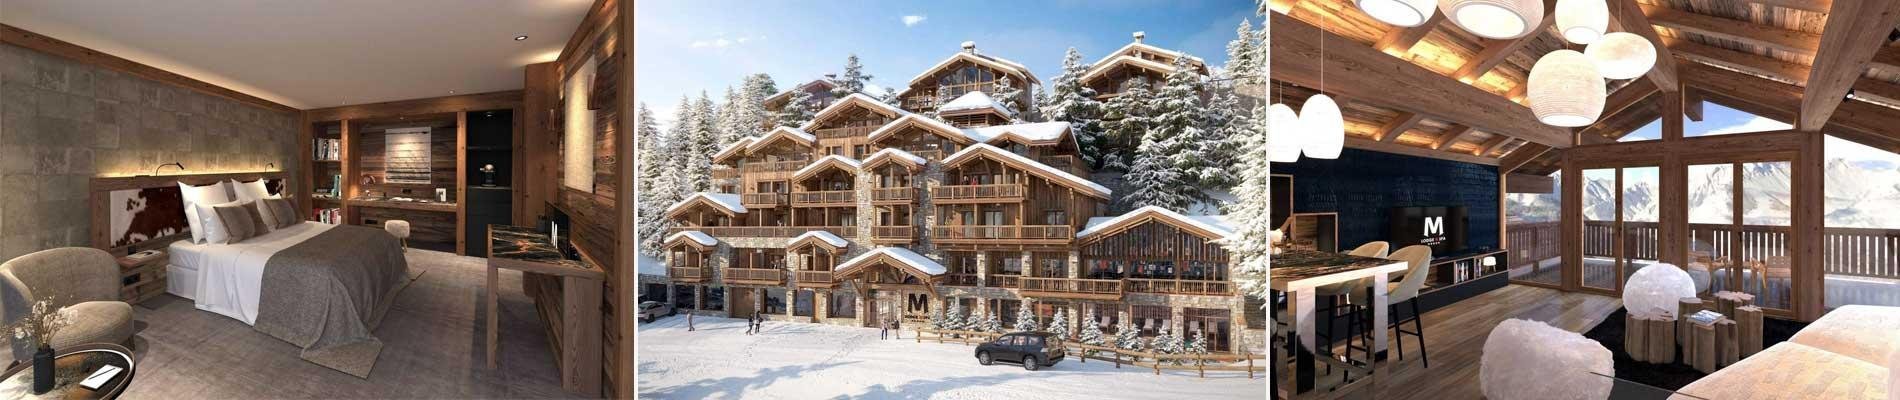 m lodge saint martin de belleville les 3 vallees luxe hotel ski wintersport